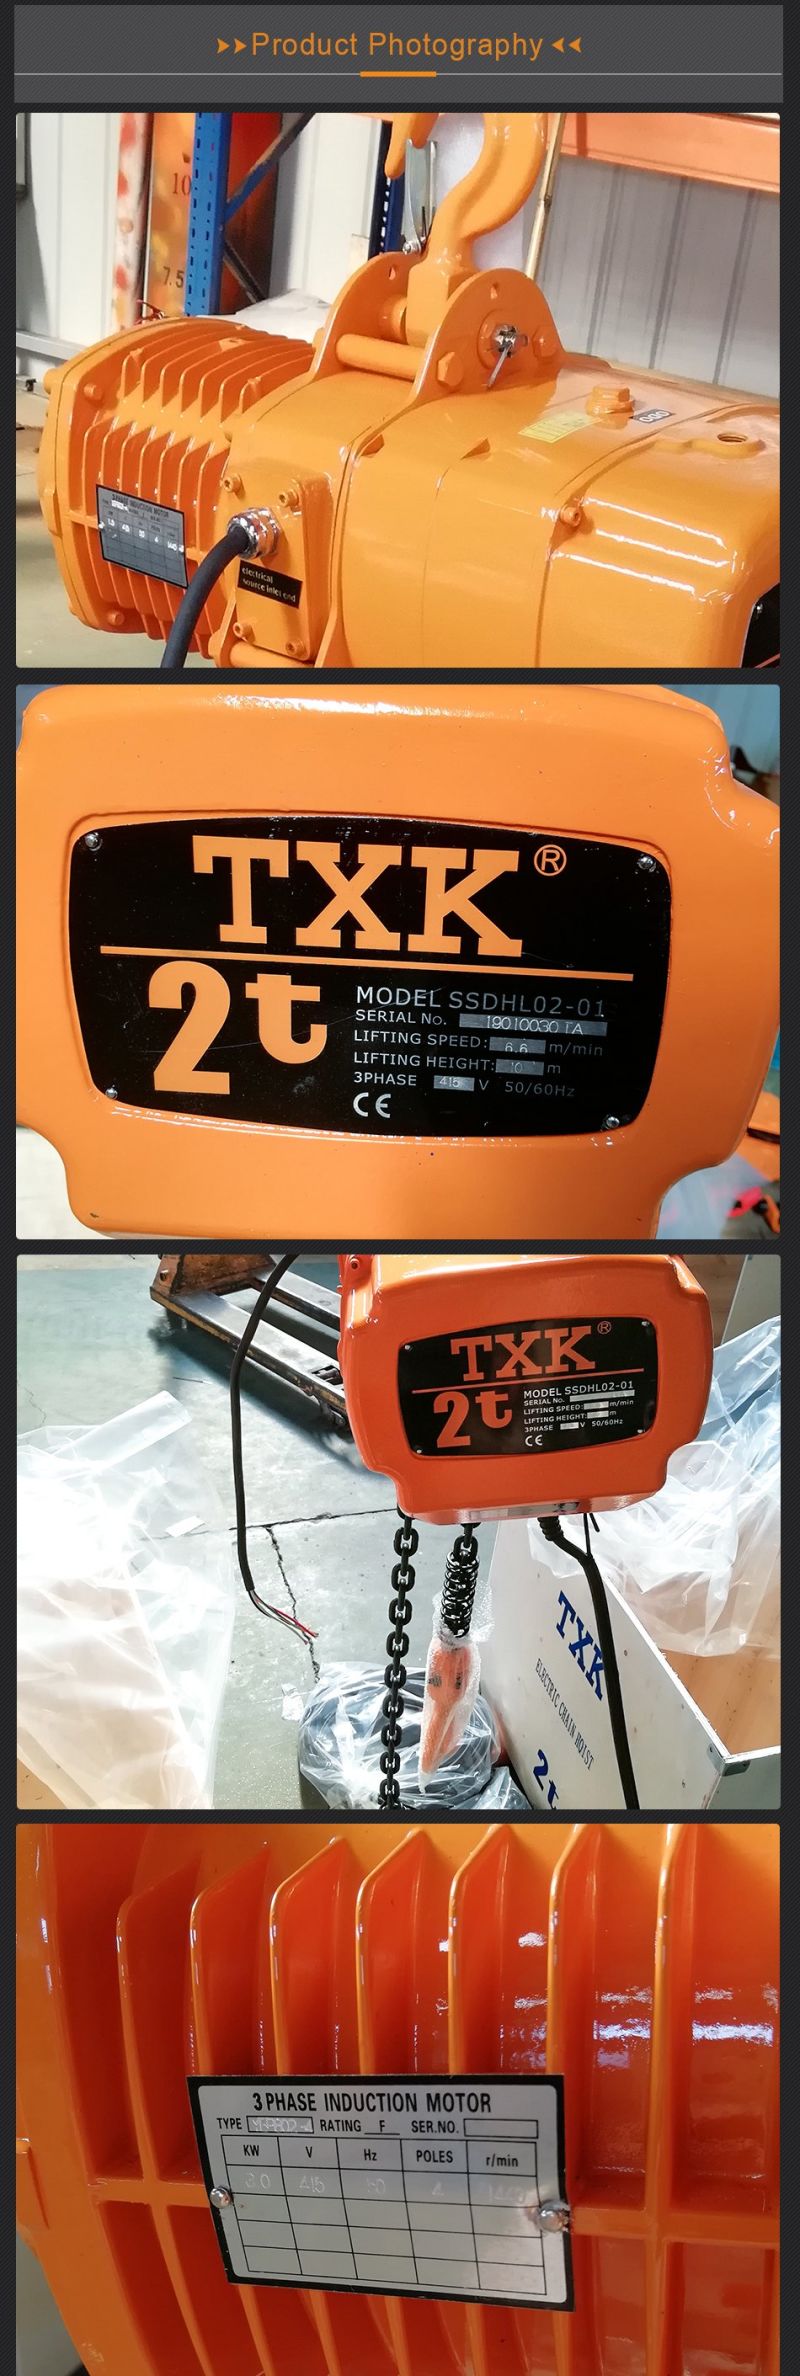 Txk China Manufacture 2 Ton Gantry Crane Electric Chain Block Hoist